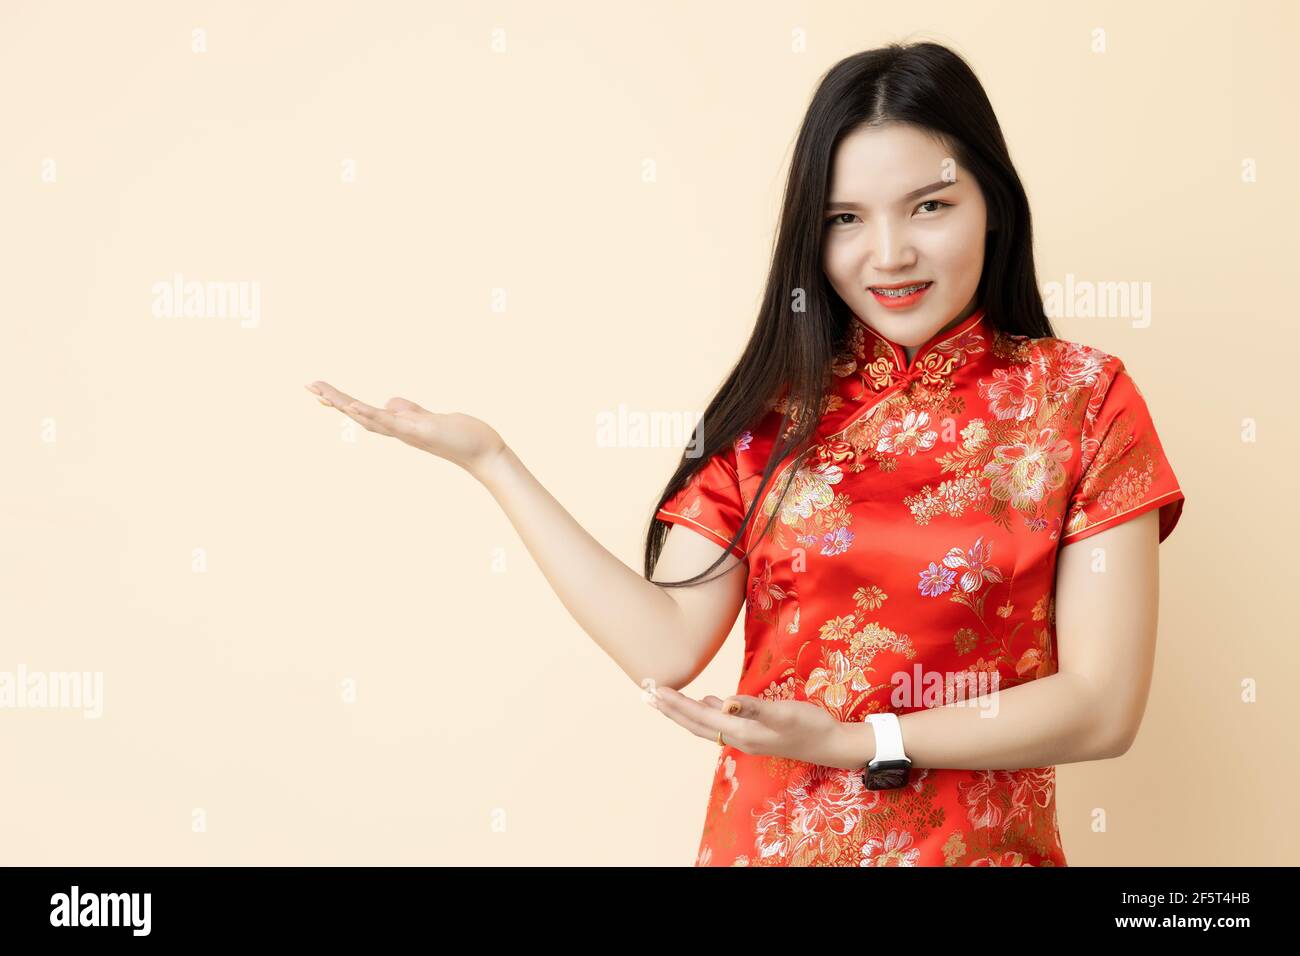 Asia China adolescente chica mano mostrar presentación venta promoción postura vestir Qipao tela tradicional. Foto de stock